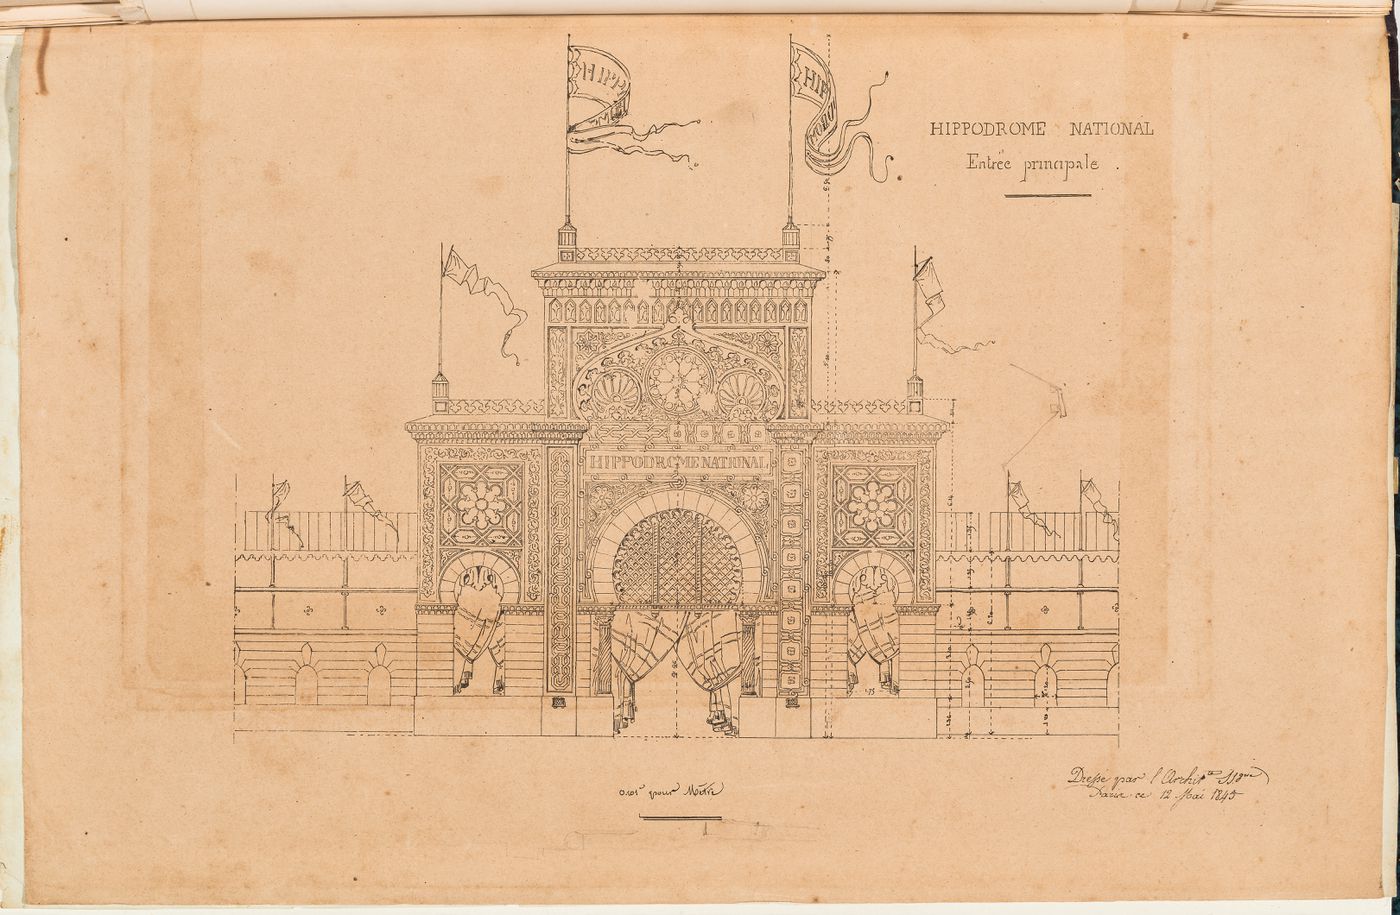 Hippodrome national, Paris: Elevation for the principal entrance